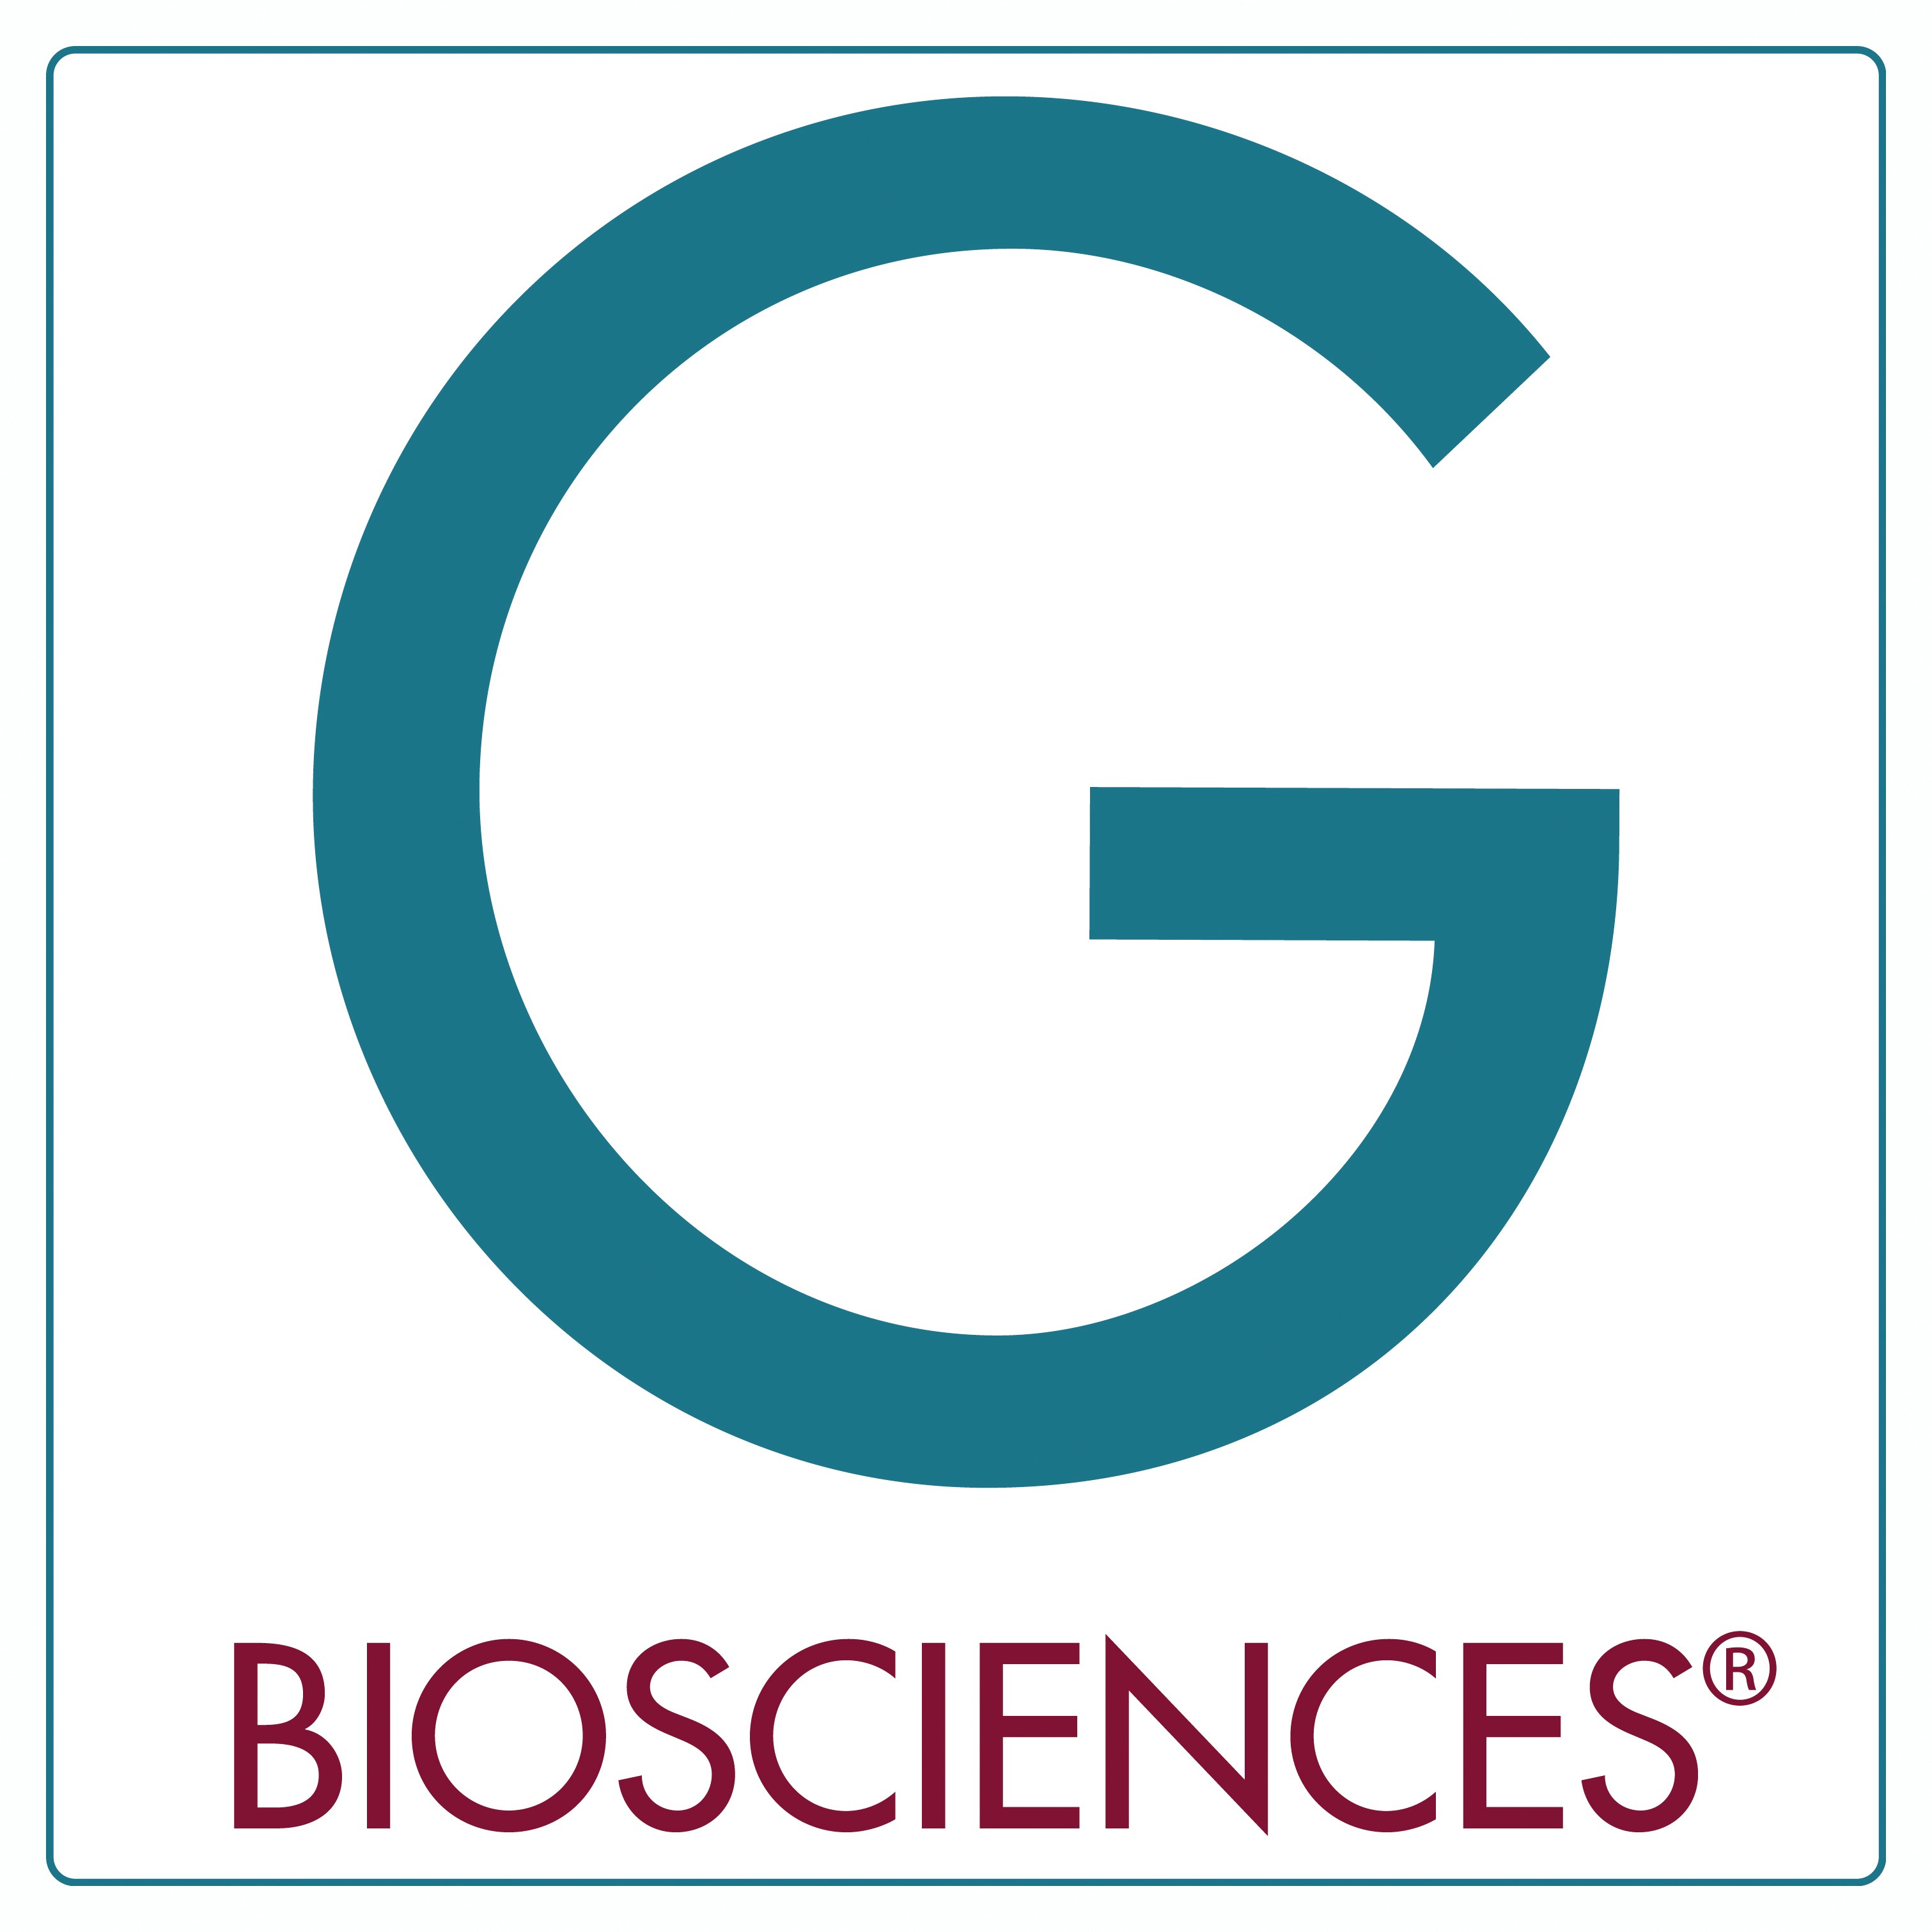 G-Biosciences辣根过氧化物酶偶联的二抗